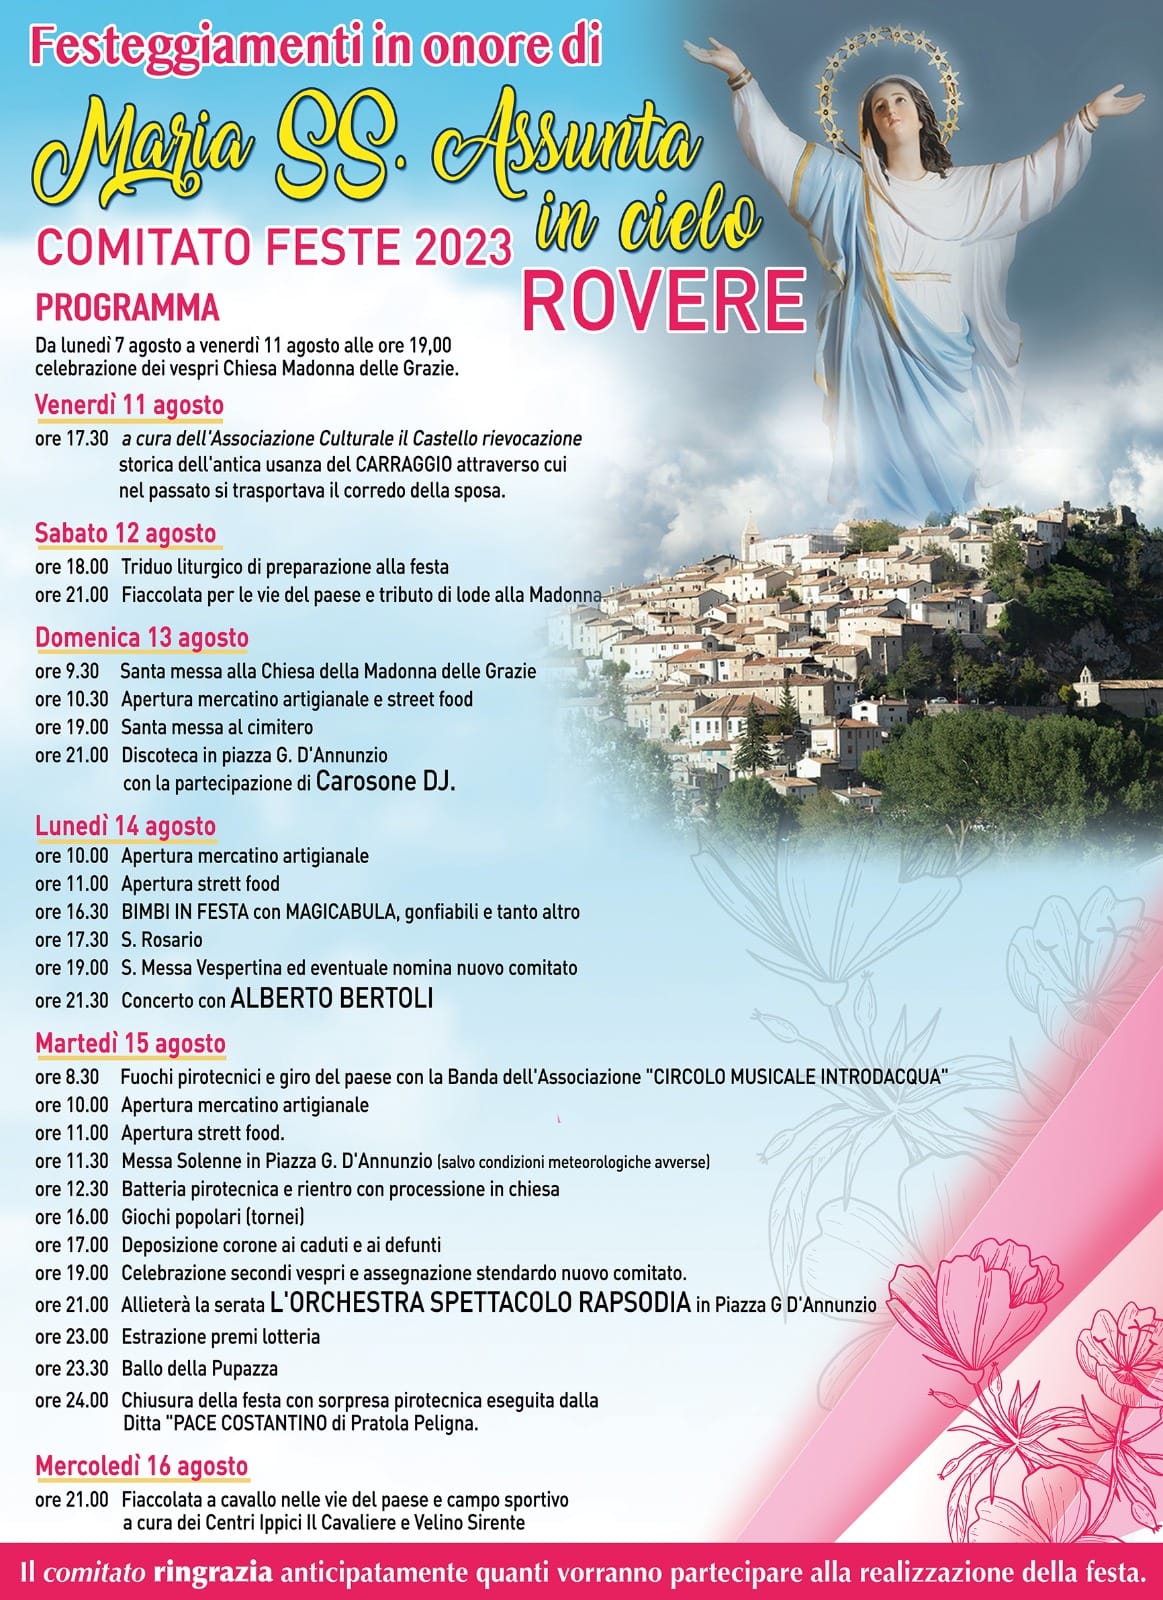 Programma festa Maria SS. Assunta in Cielo - Rovere 2023